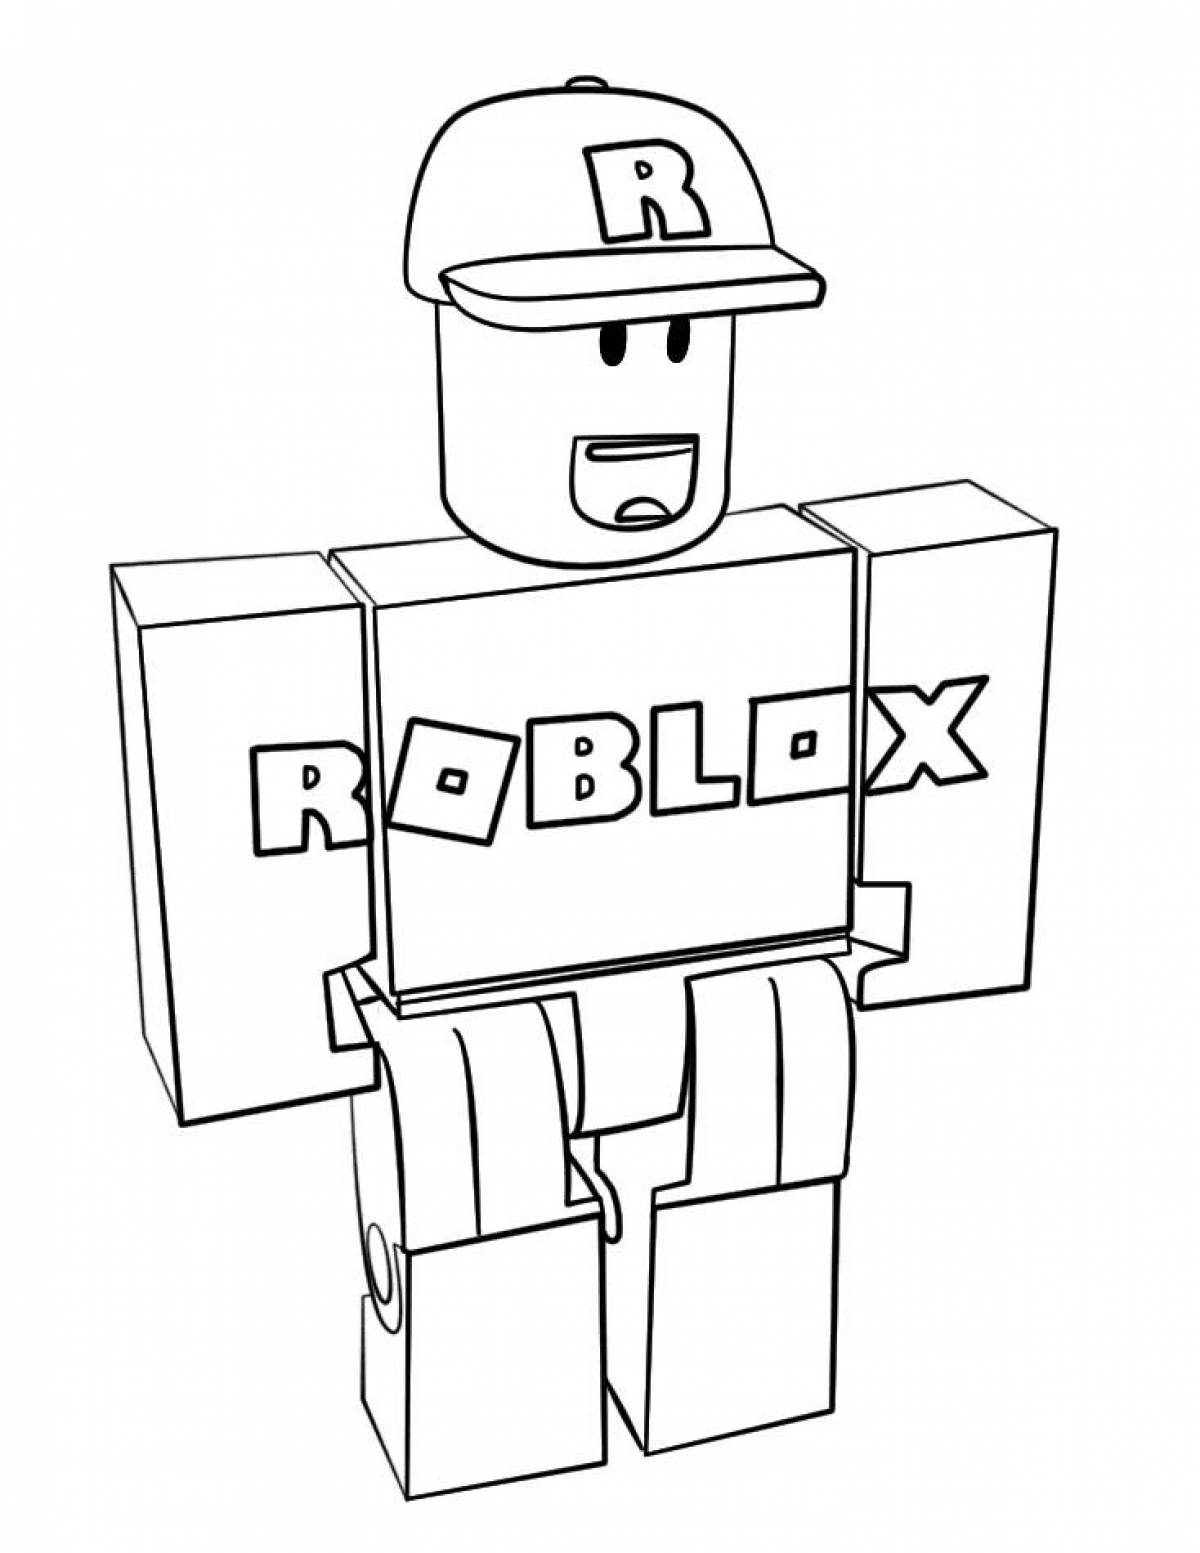 Roblox #22